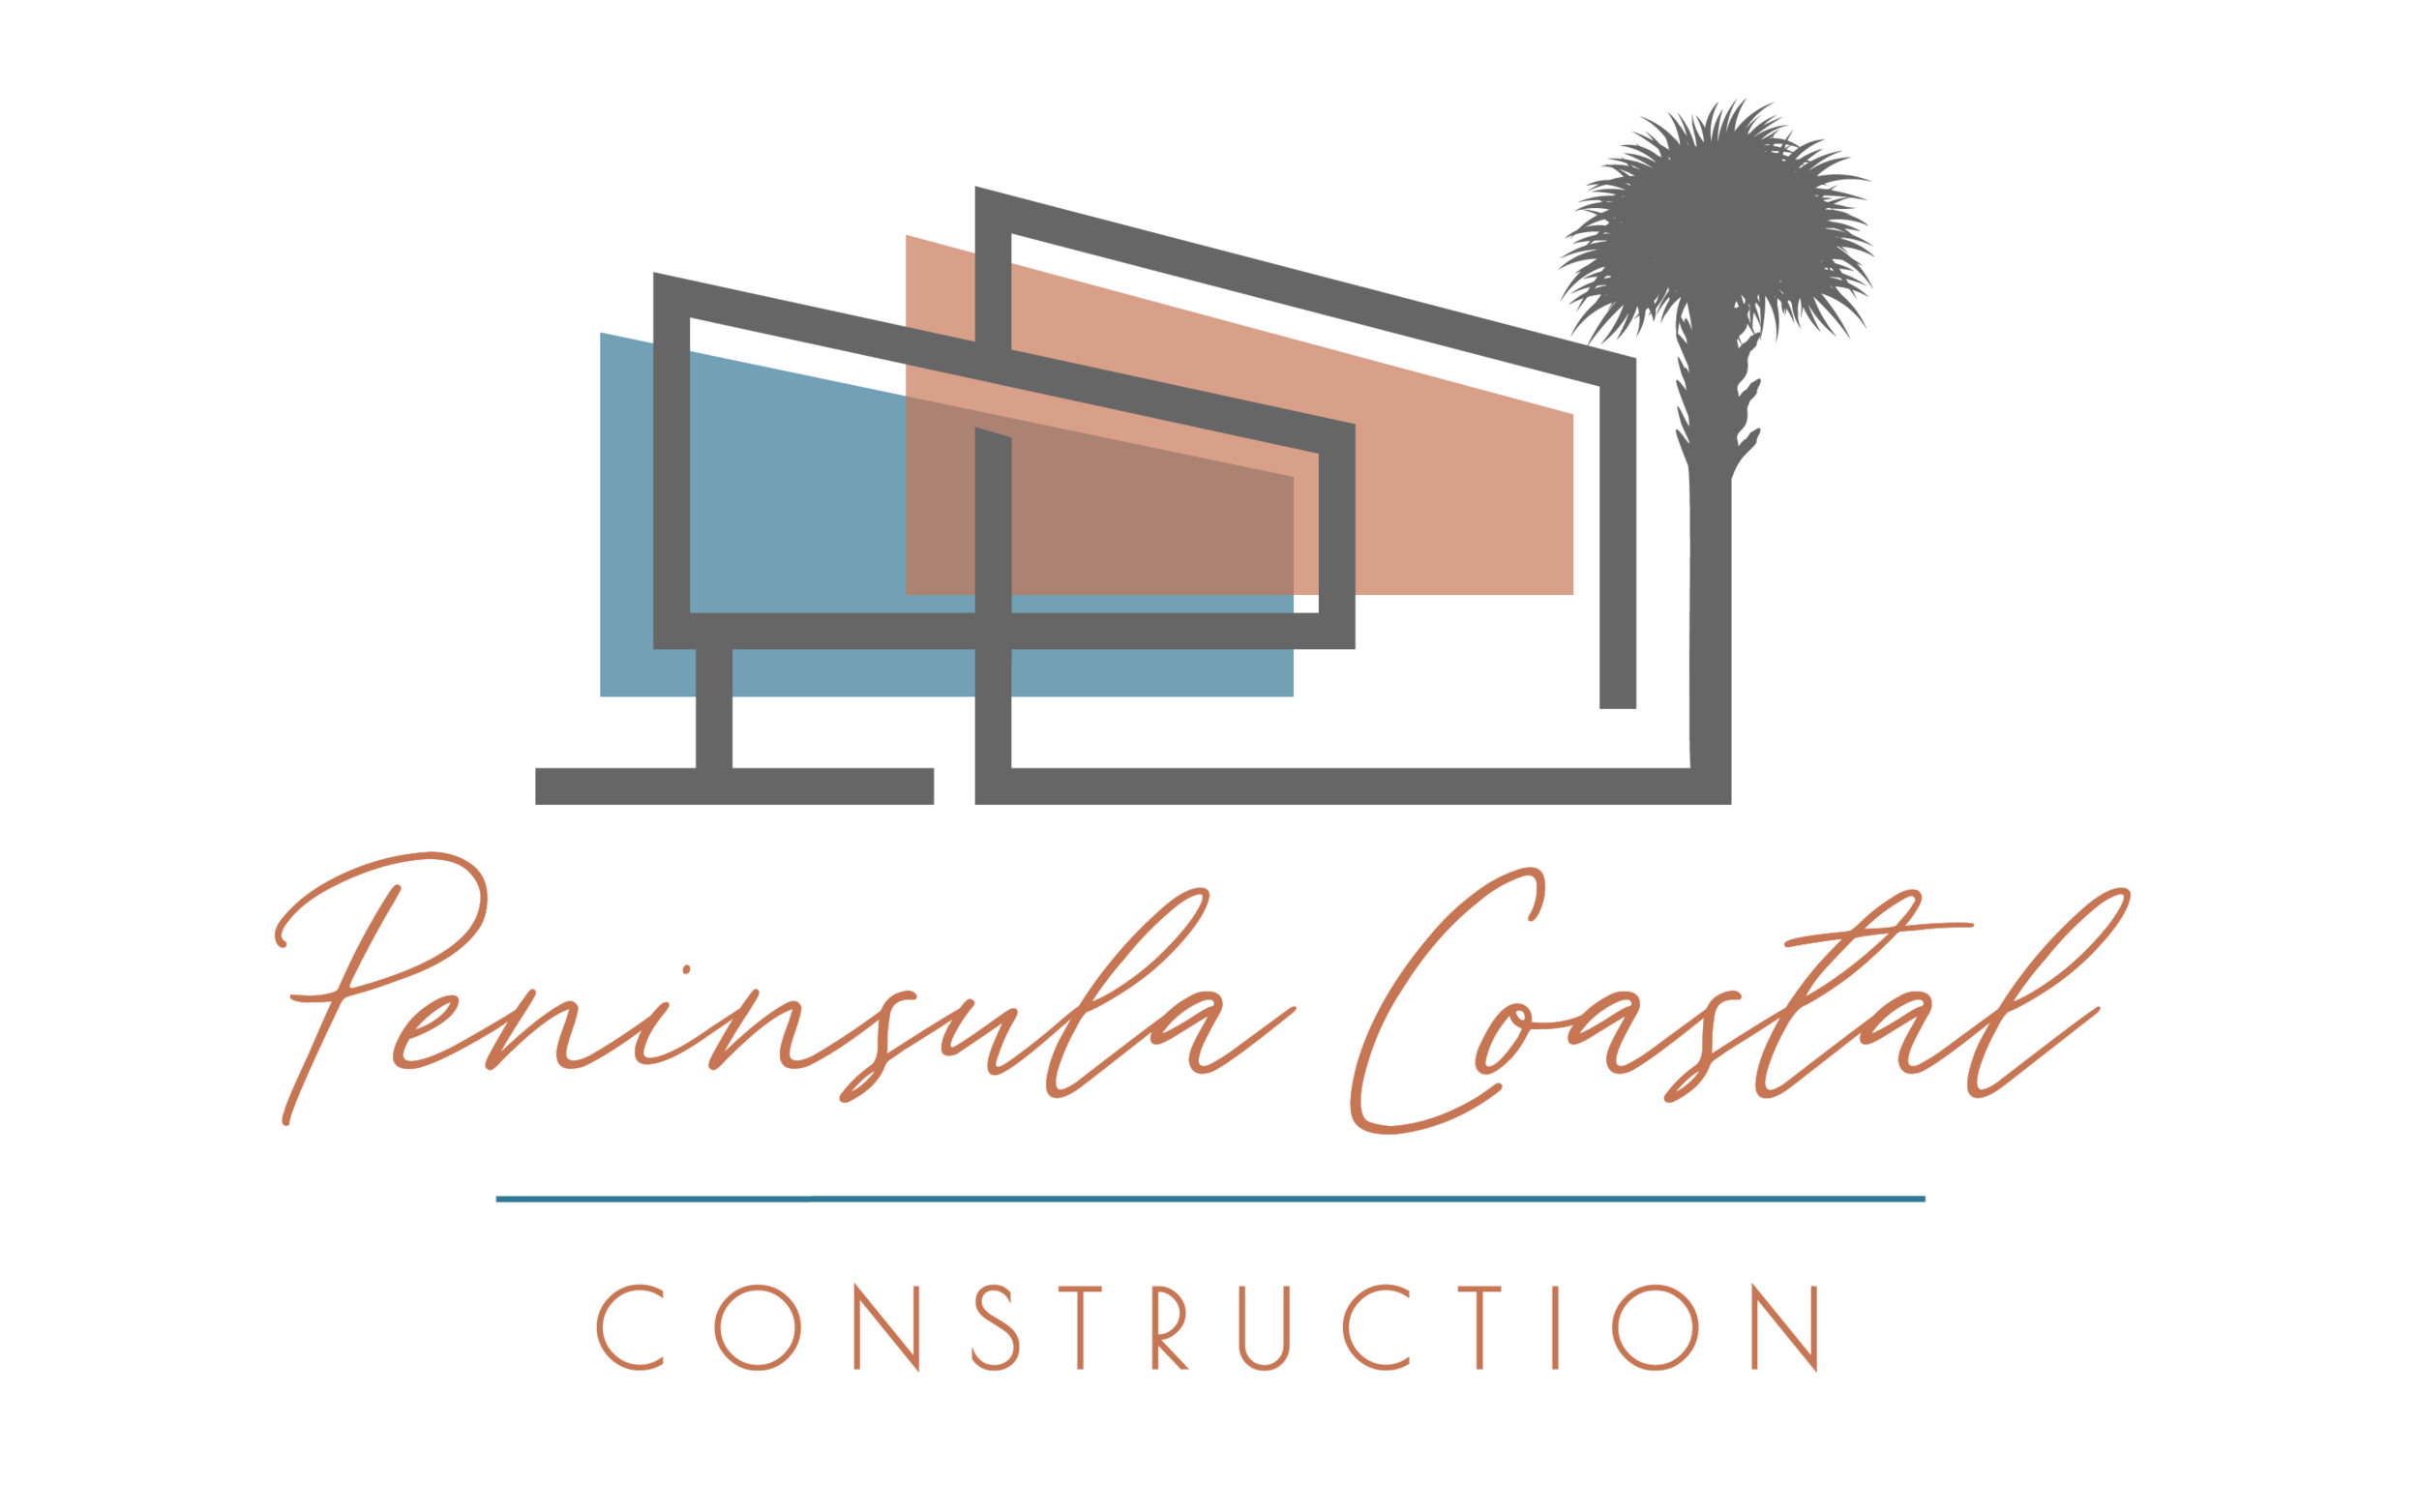 Peninsula Coastal Construction